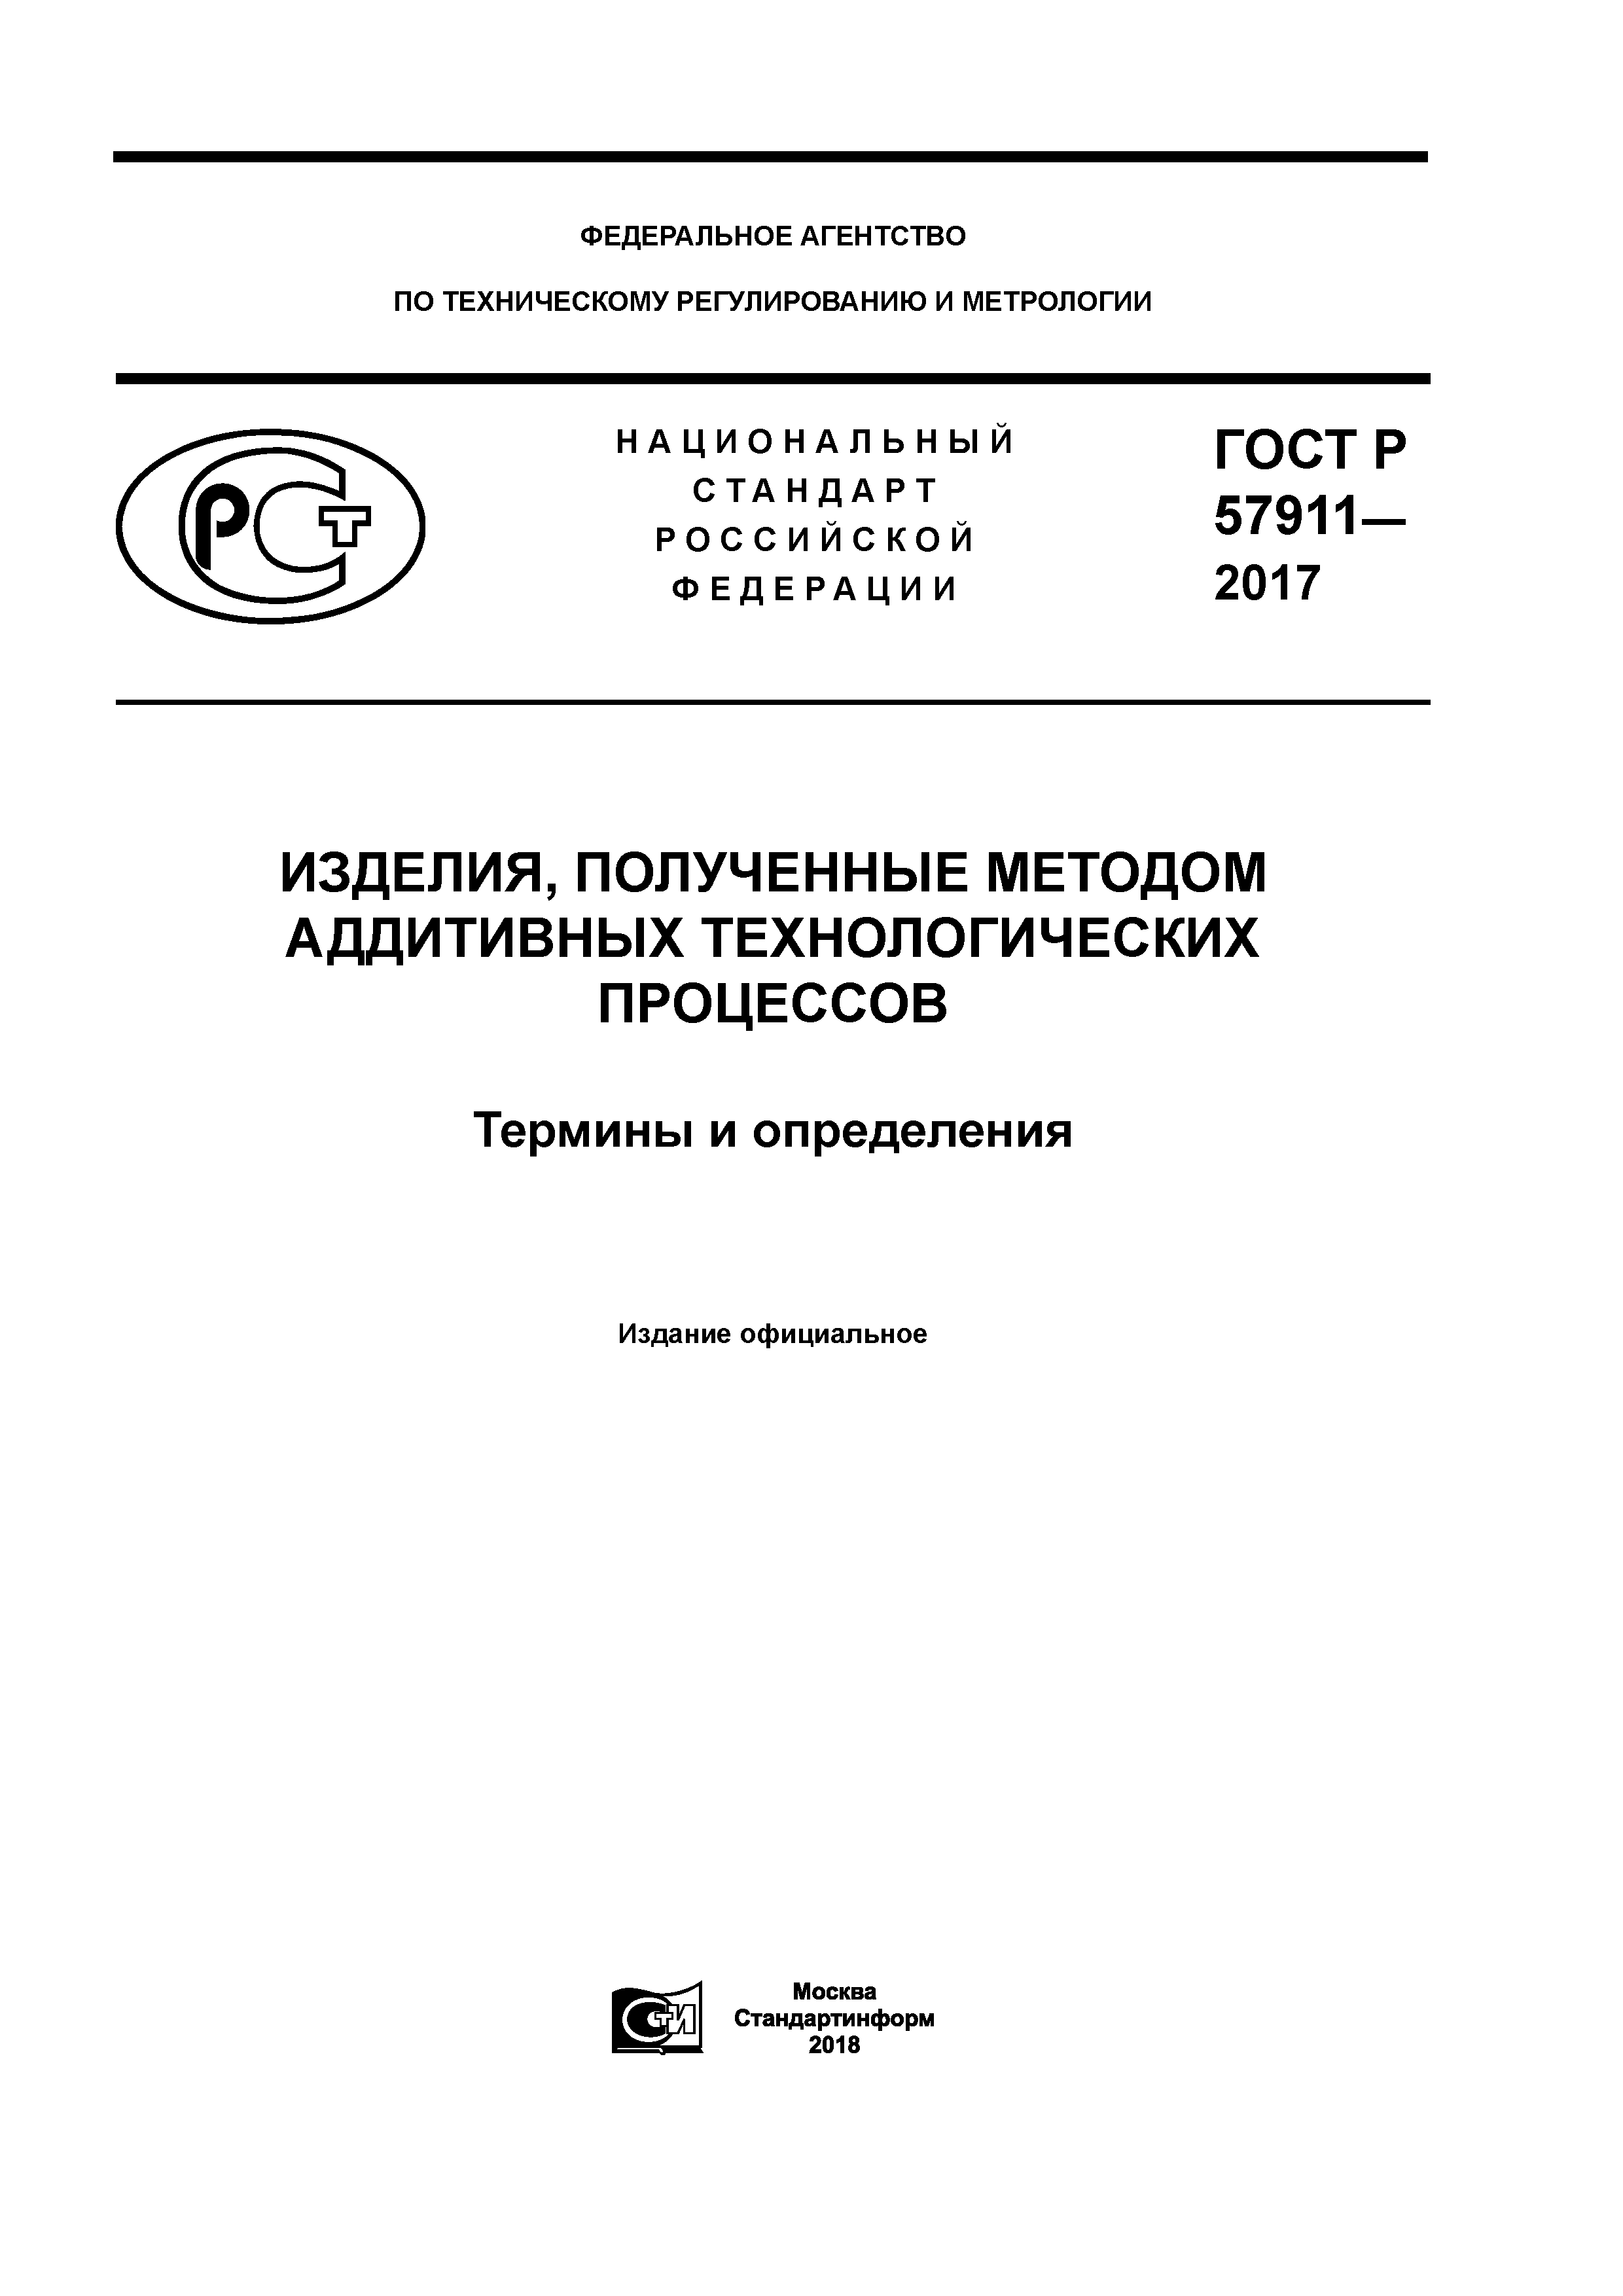 ГОСТ Р 57911-2017